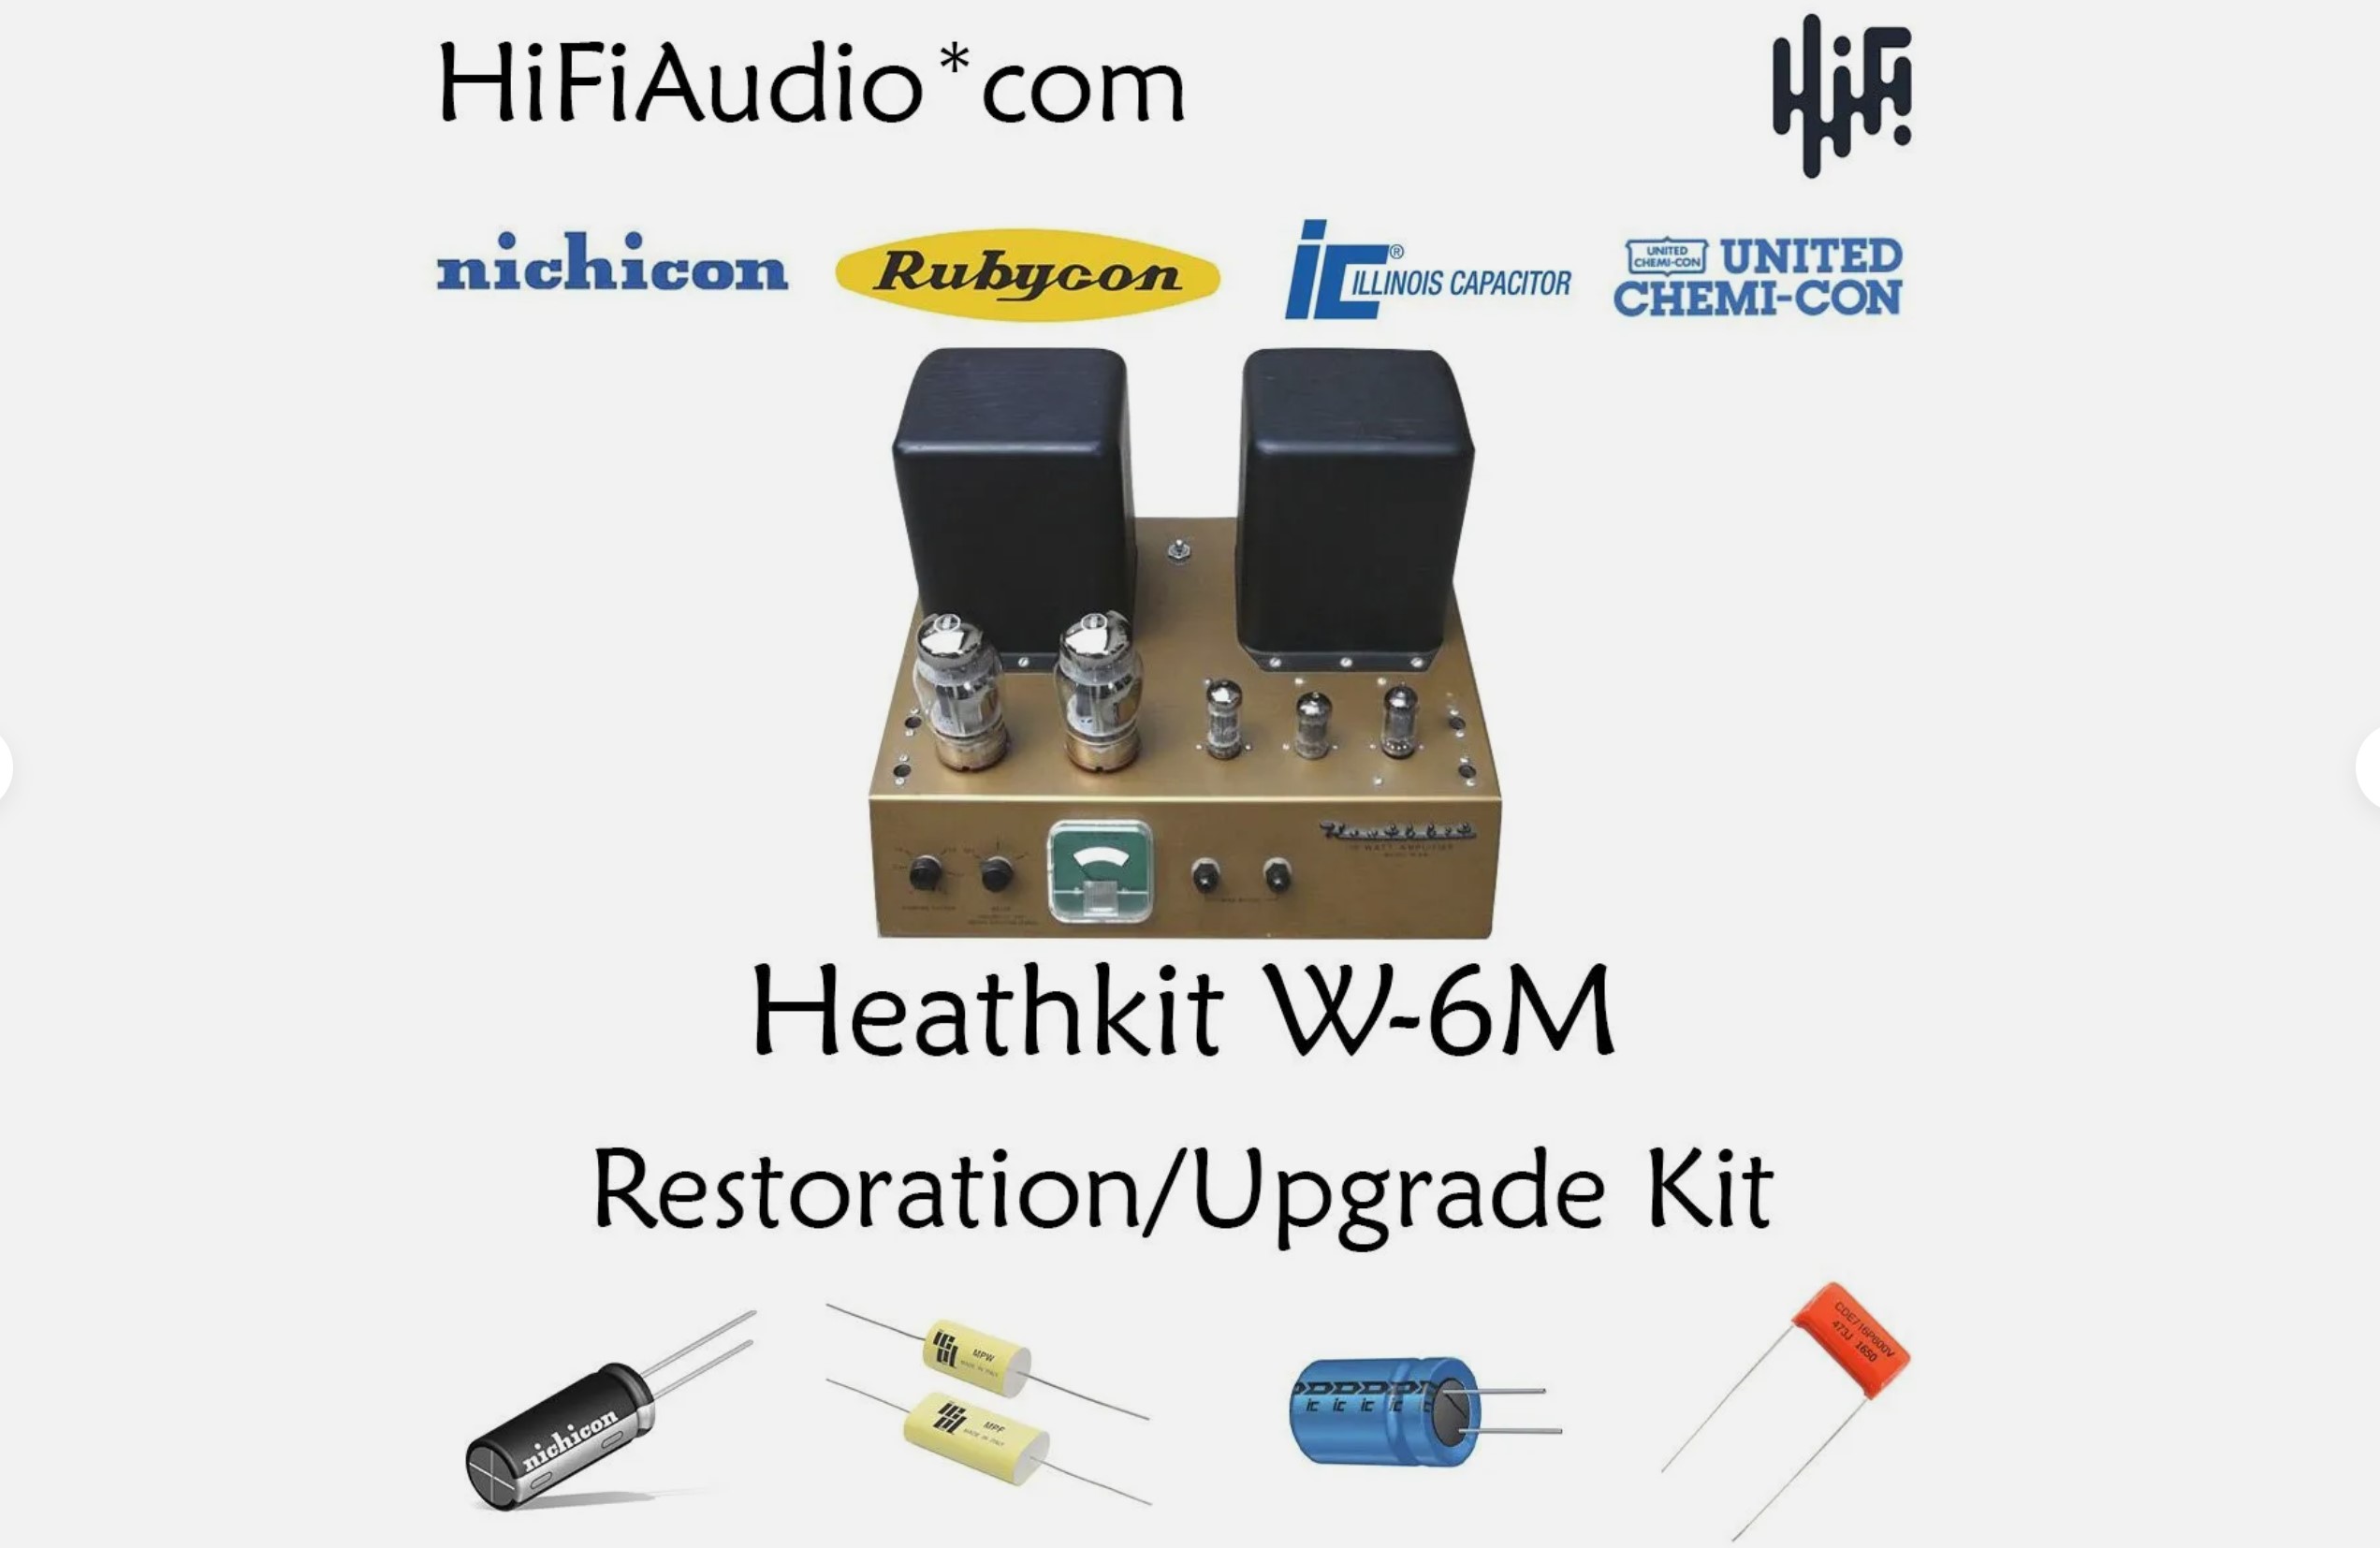 Heathkit W-6M restoration kit